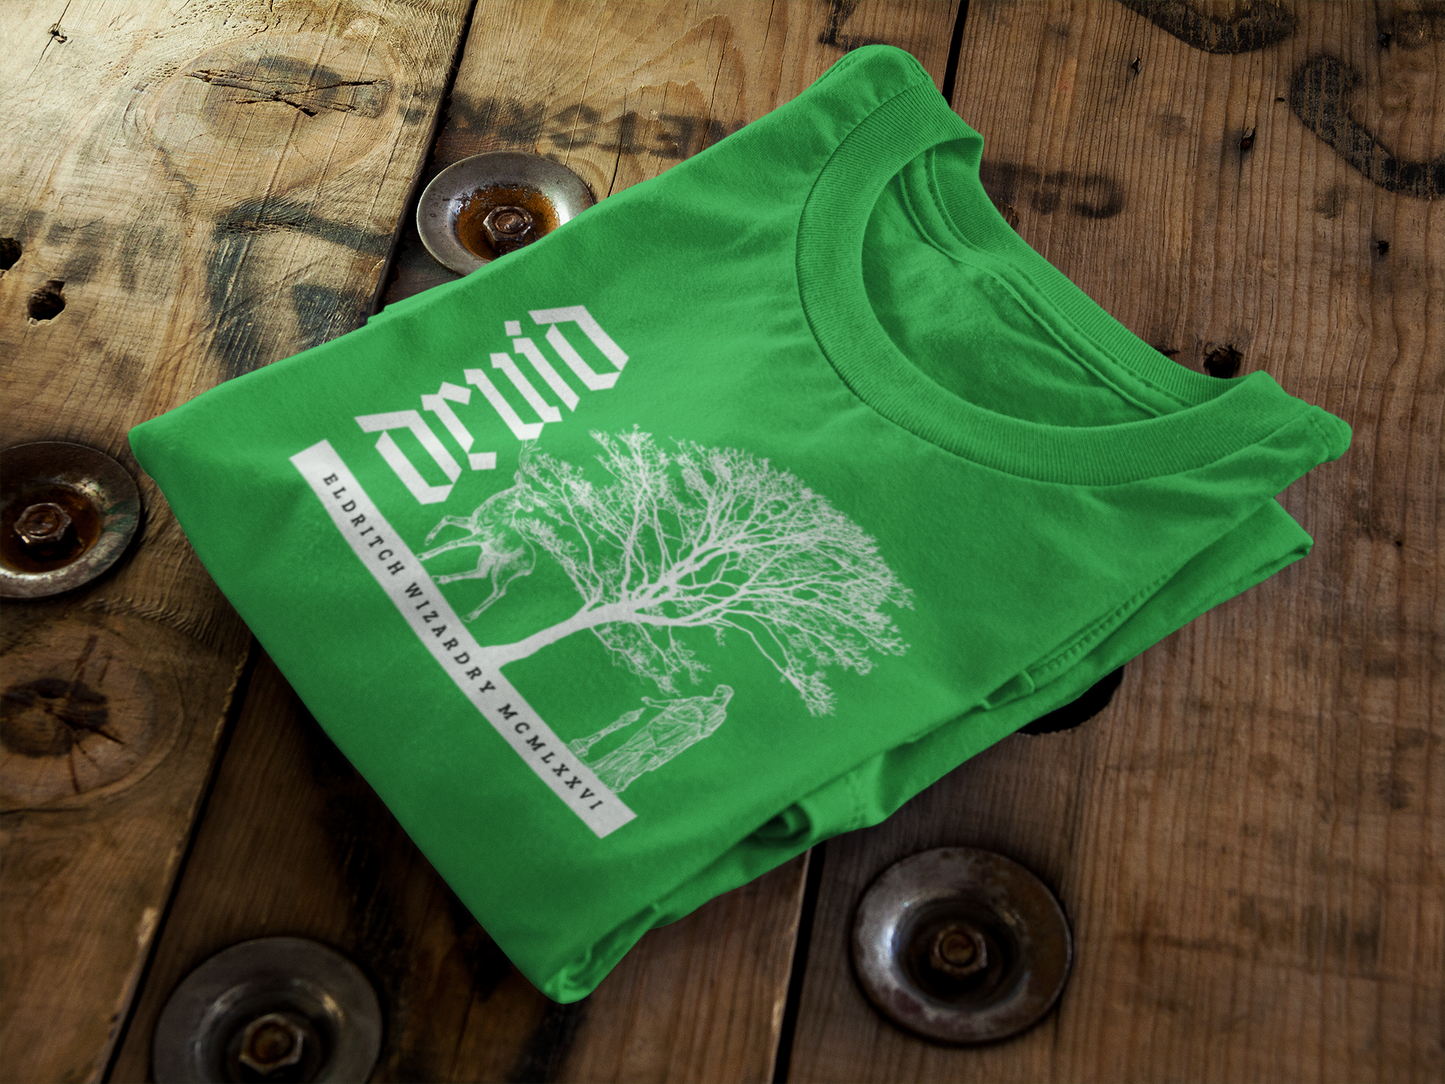 Druid T-Shirt